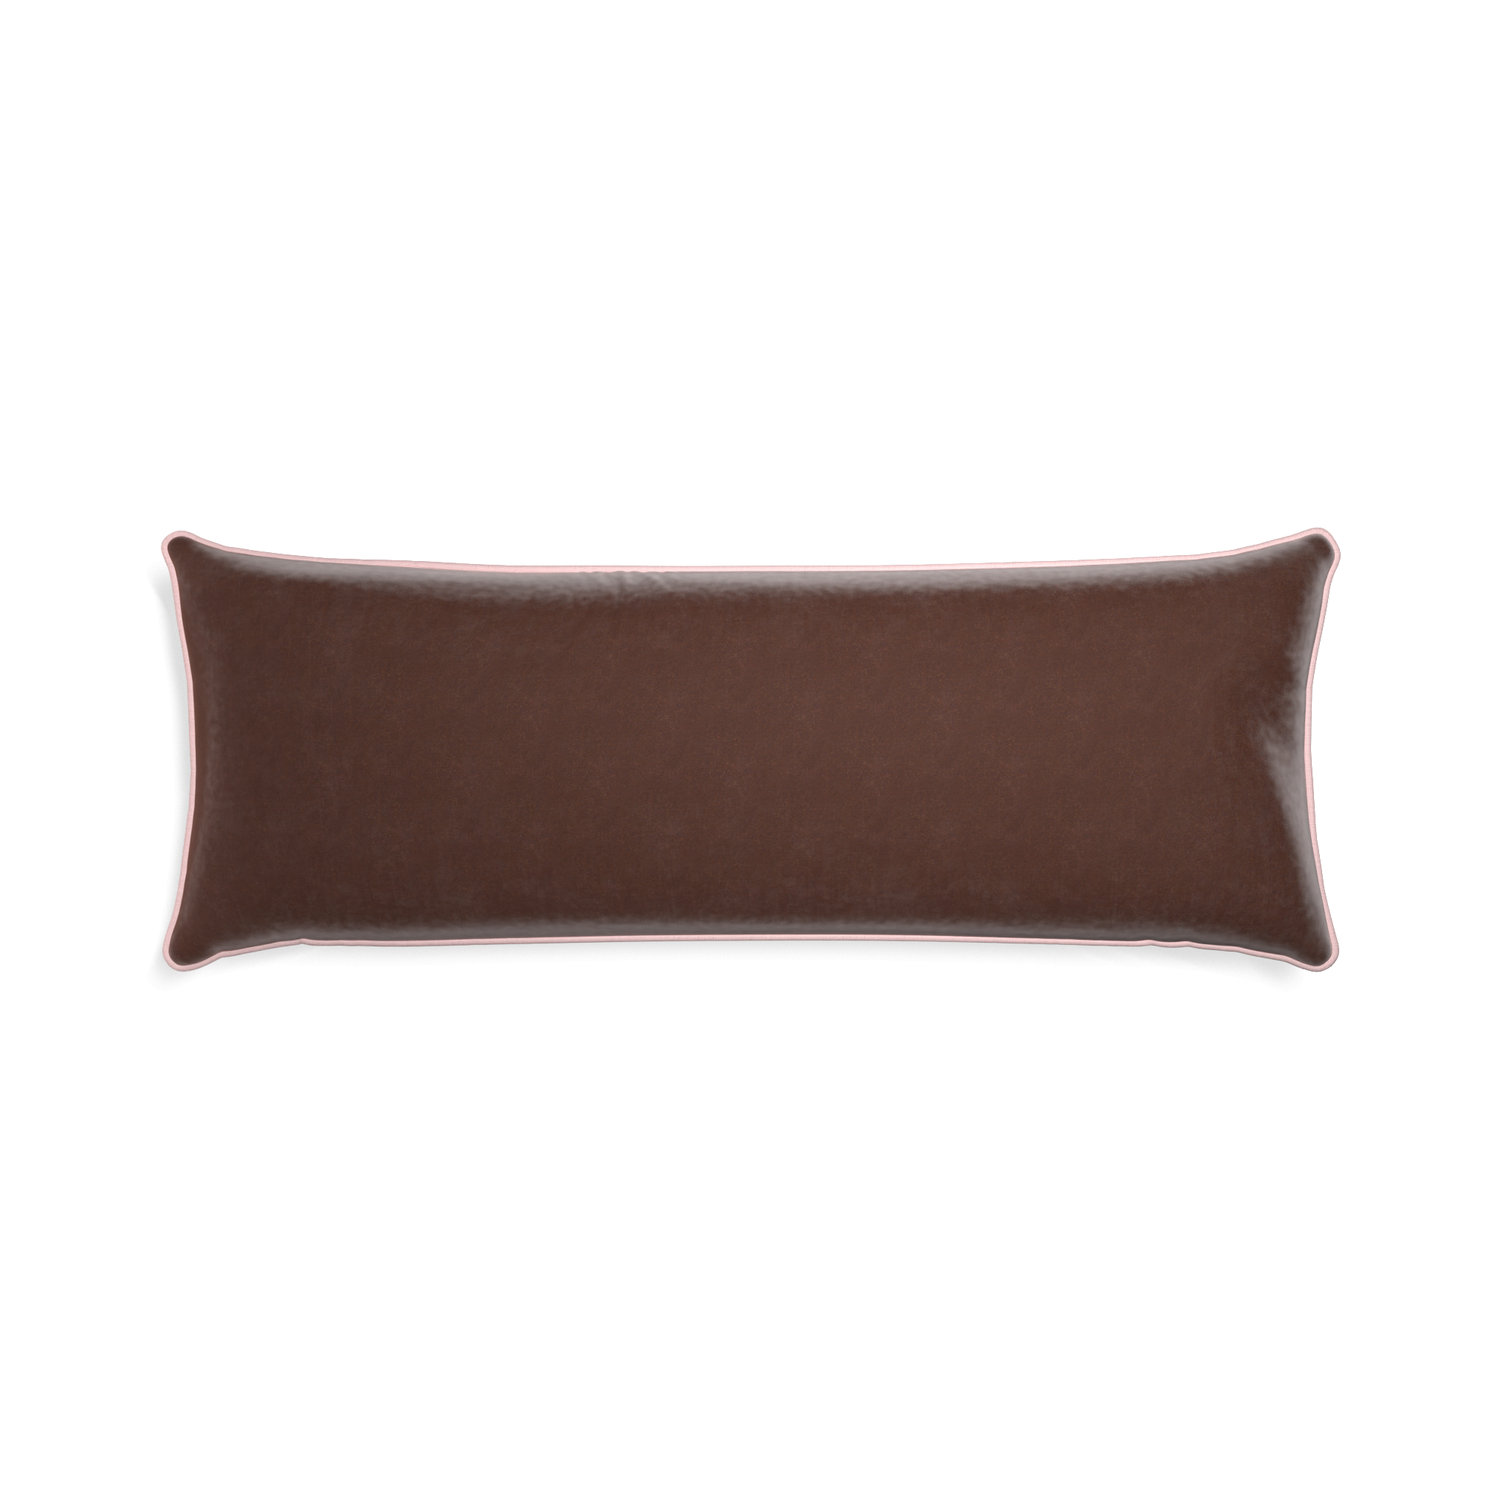 Xl-lumbar walnut velvet custom pillow with petal piping on white background